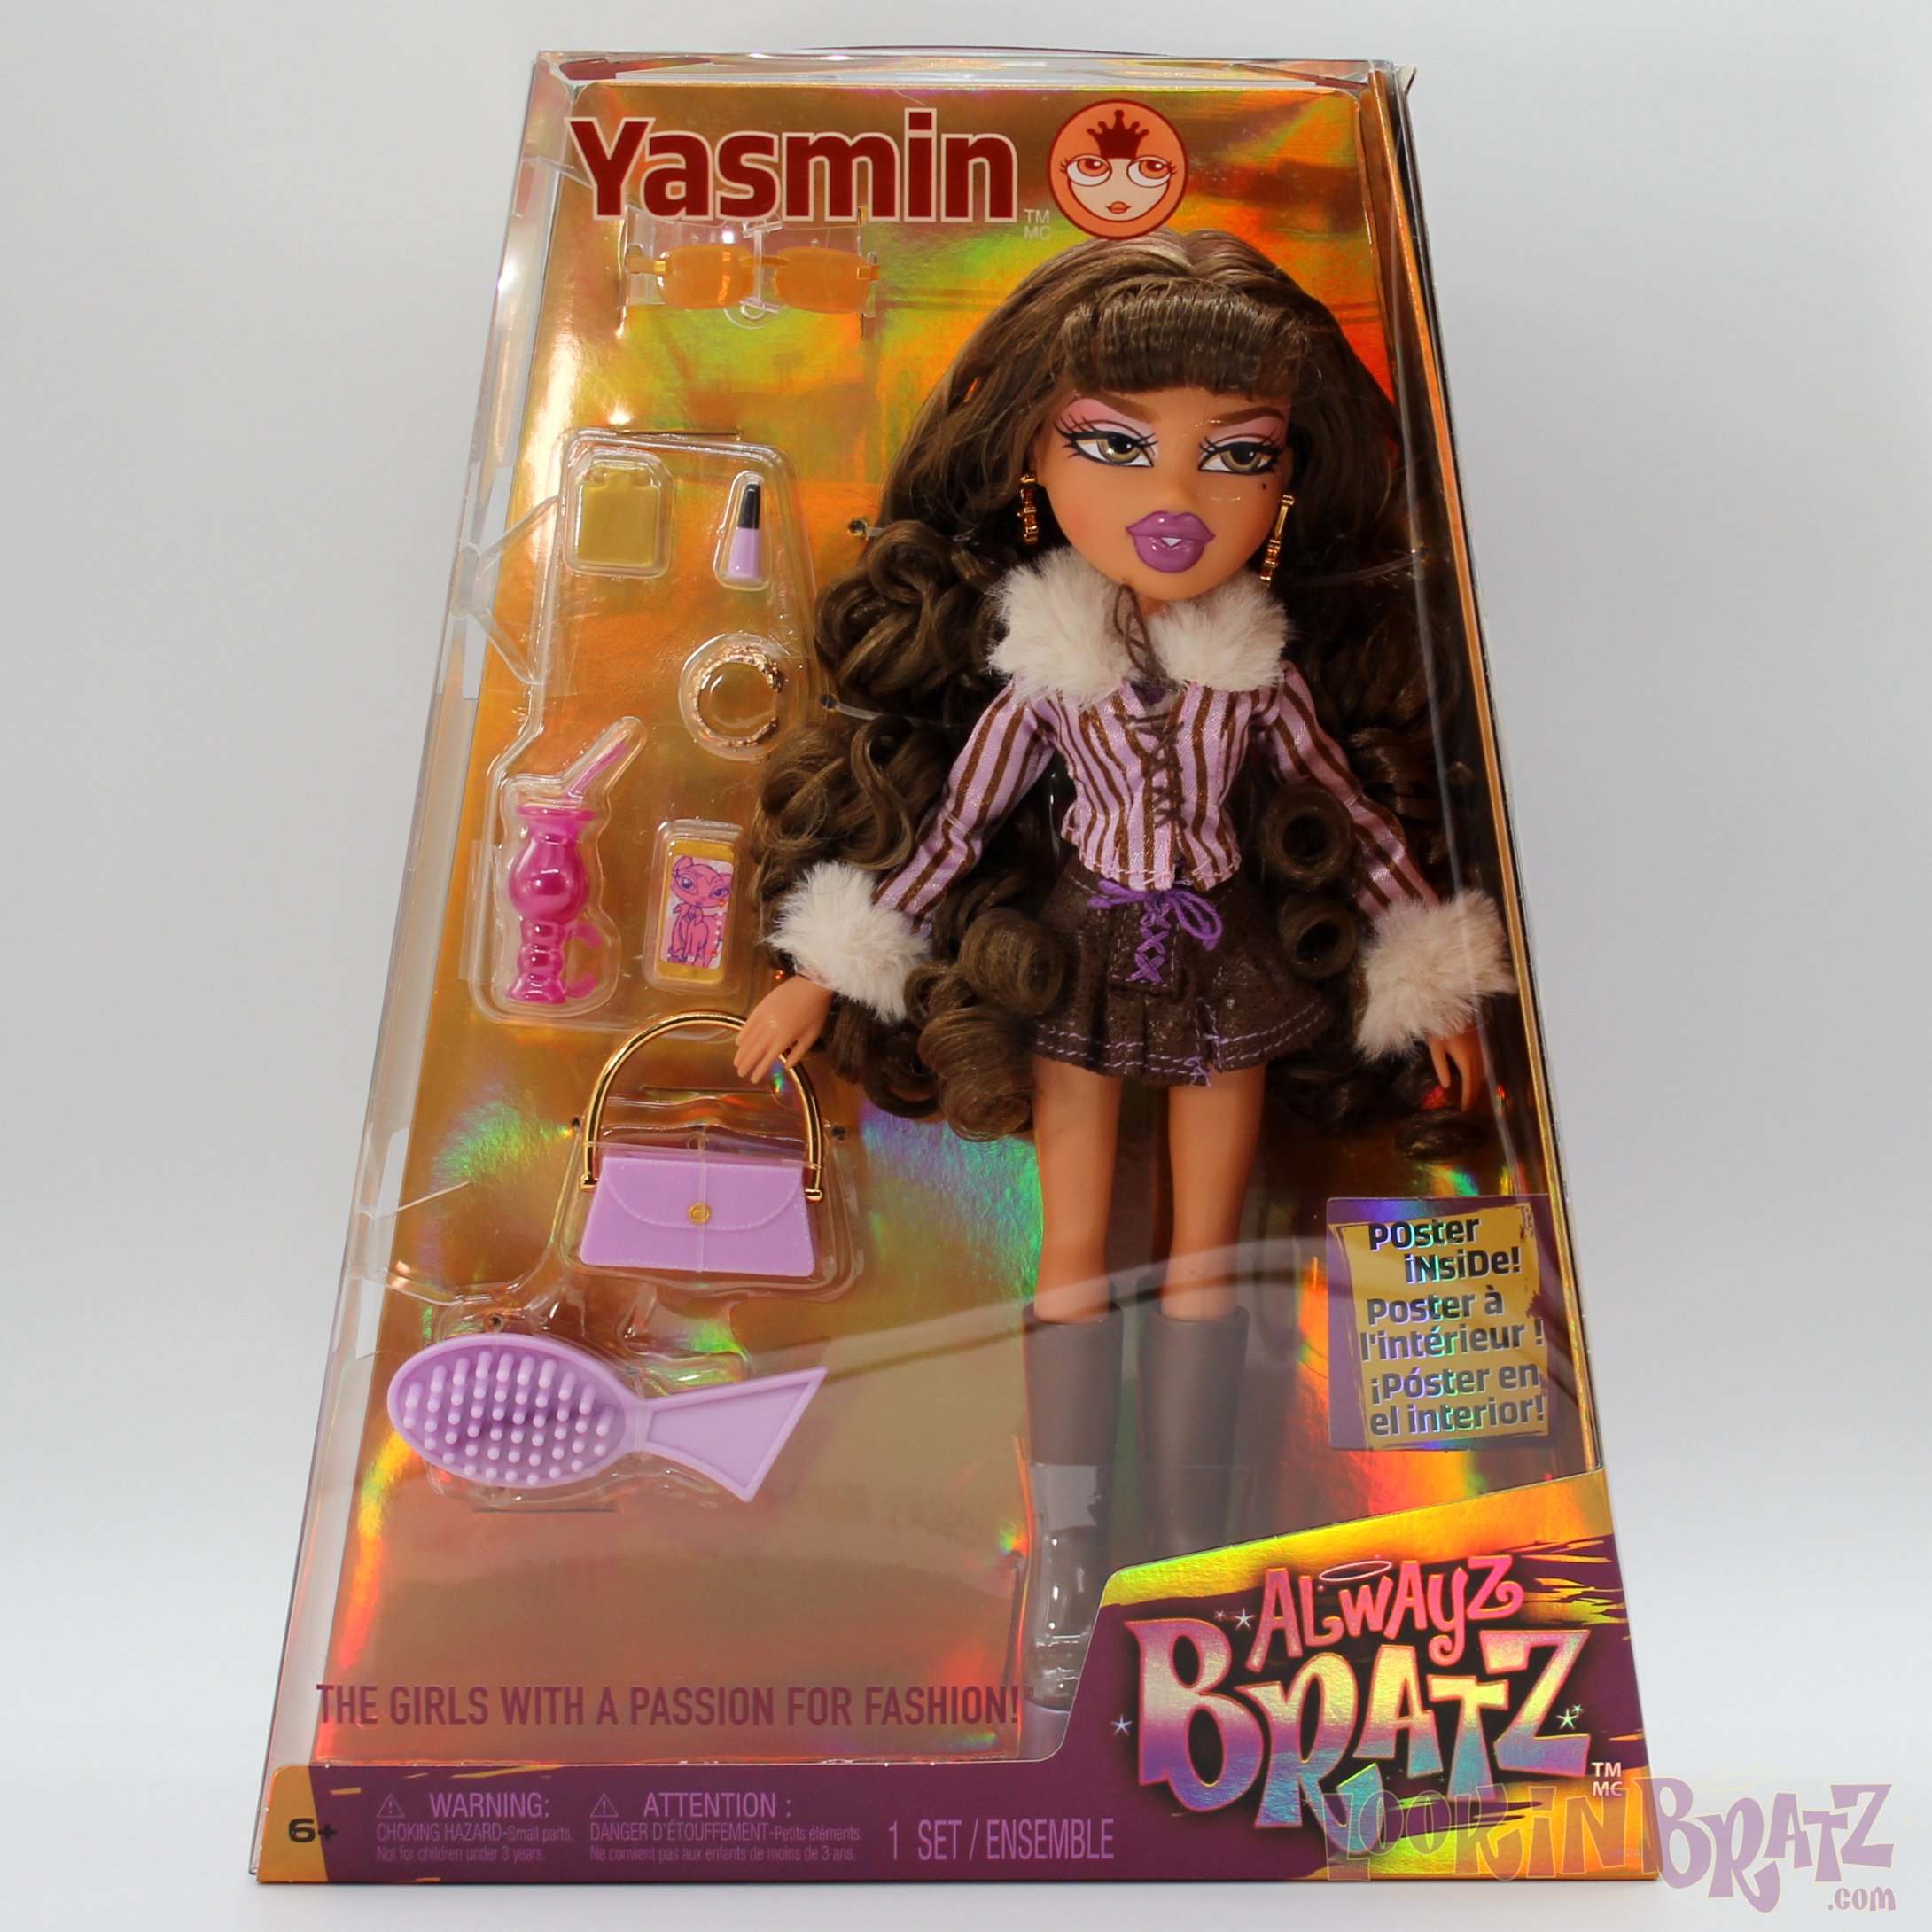 Alwayz Bratz Yasmin Packaging (Front)